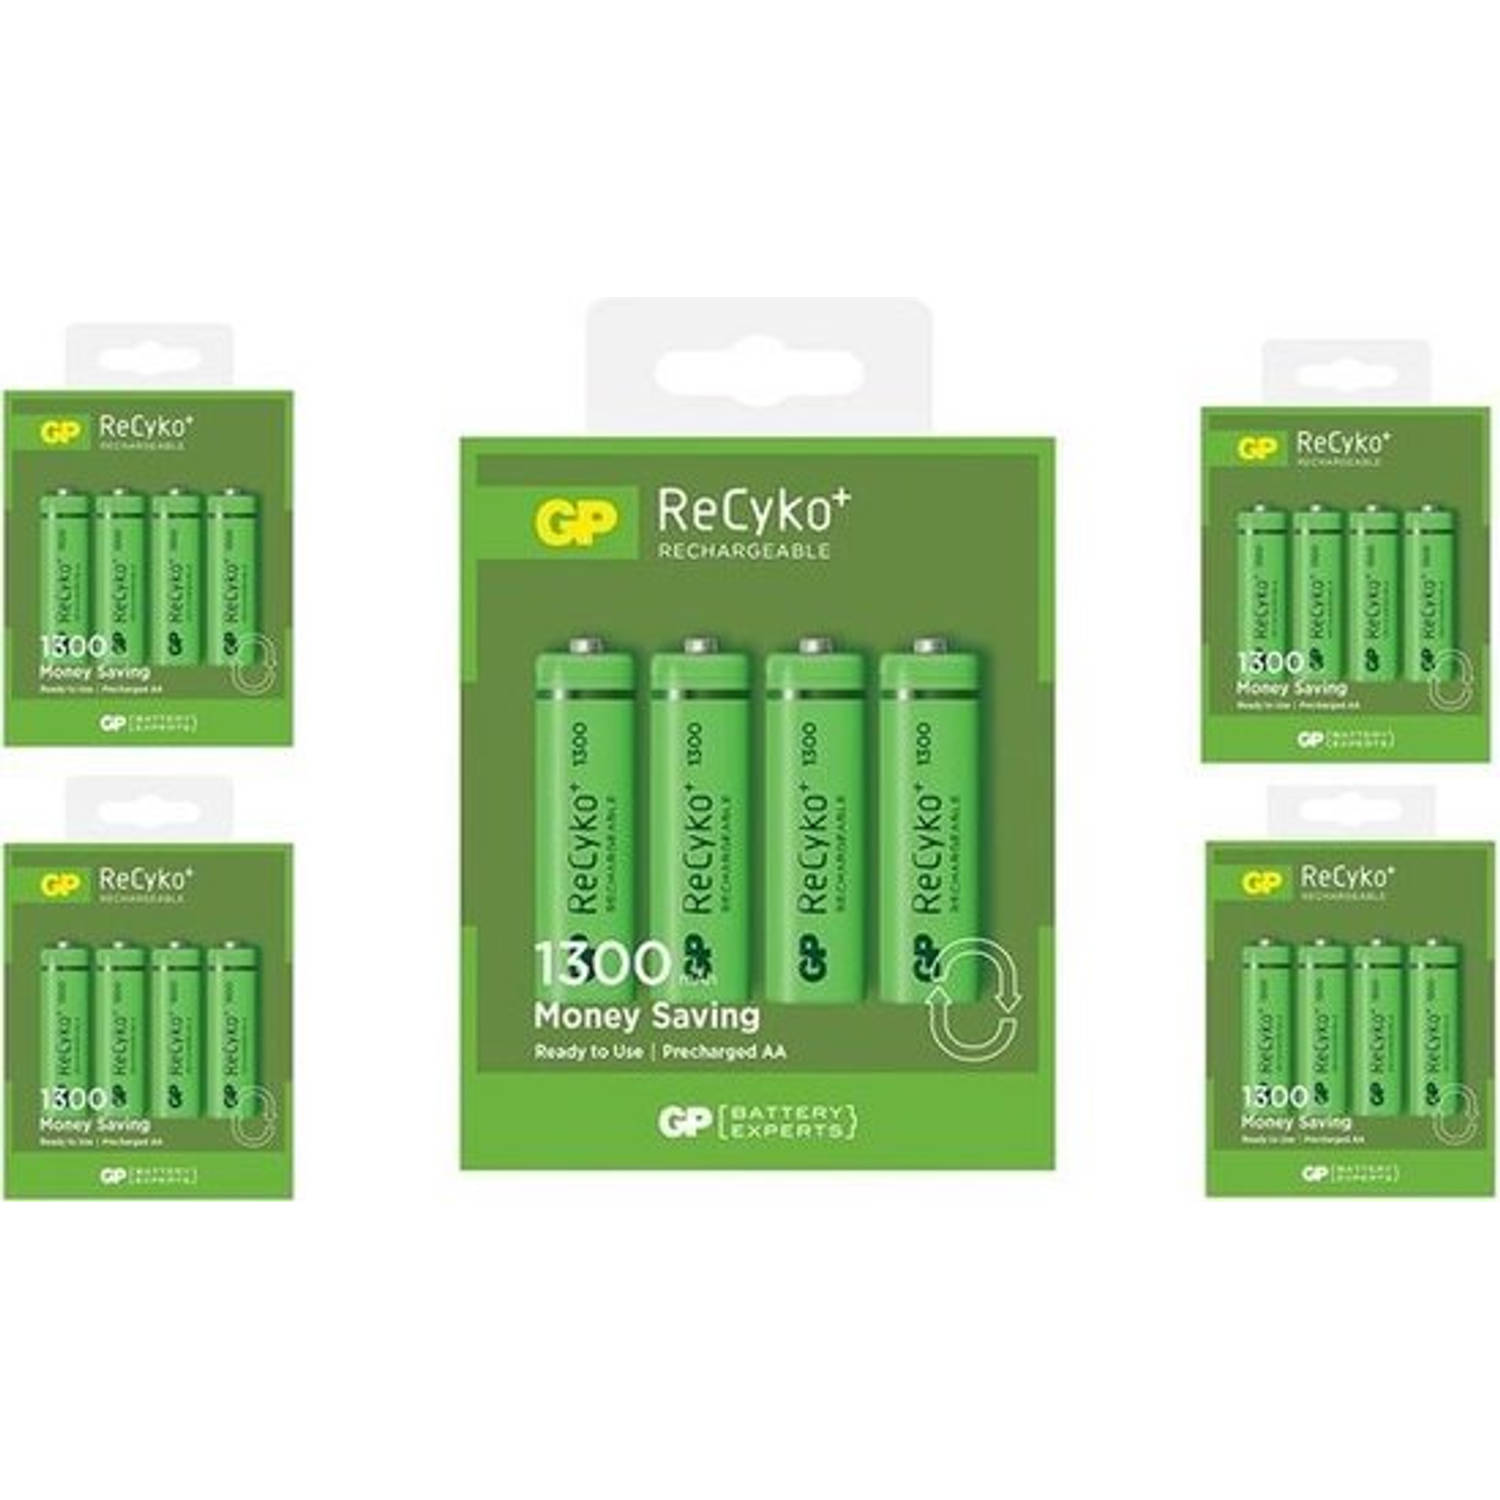 20 Stuks Gp Recyco+ Aa-Mignon-Hr6-Lr6 1300mah Oplaadbare Batterijen 1300 Series